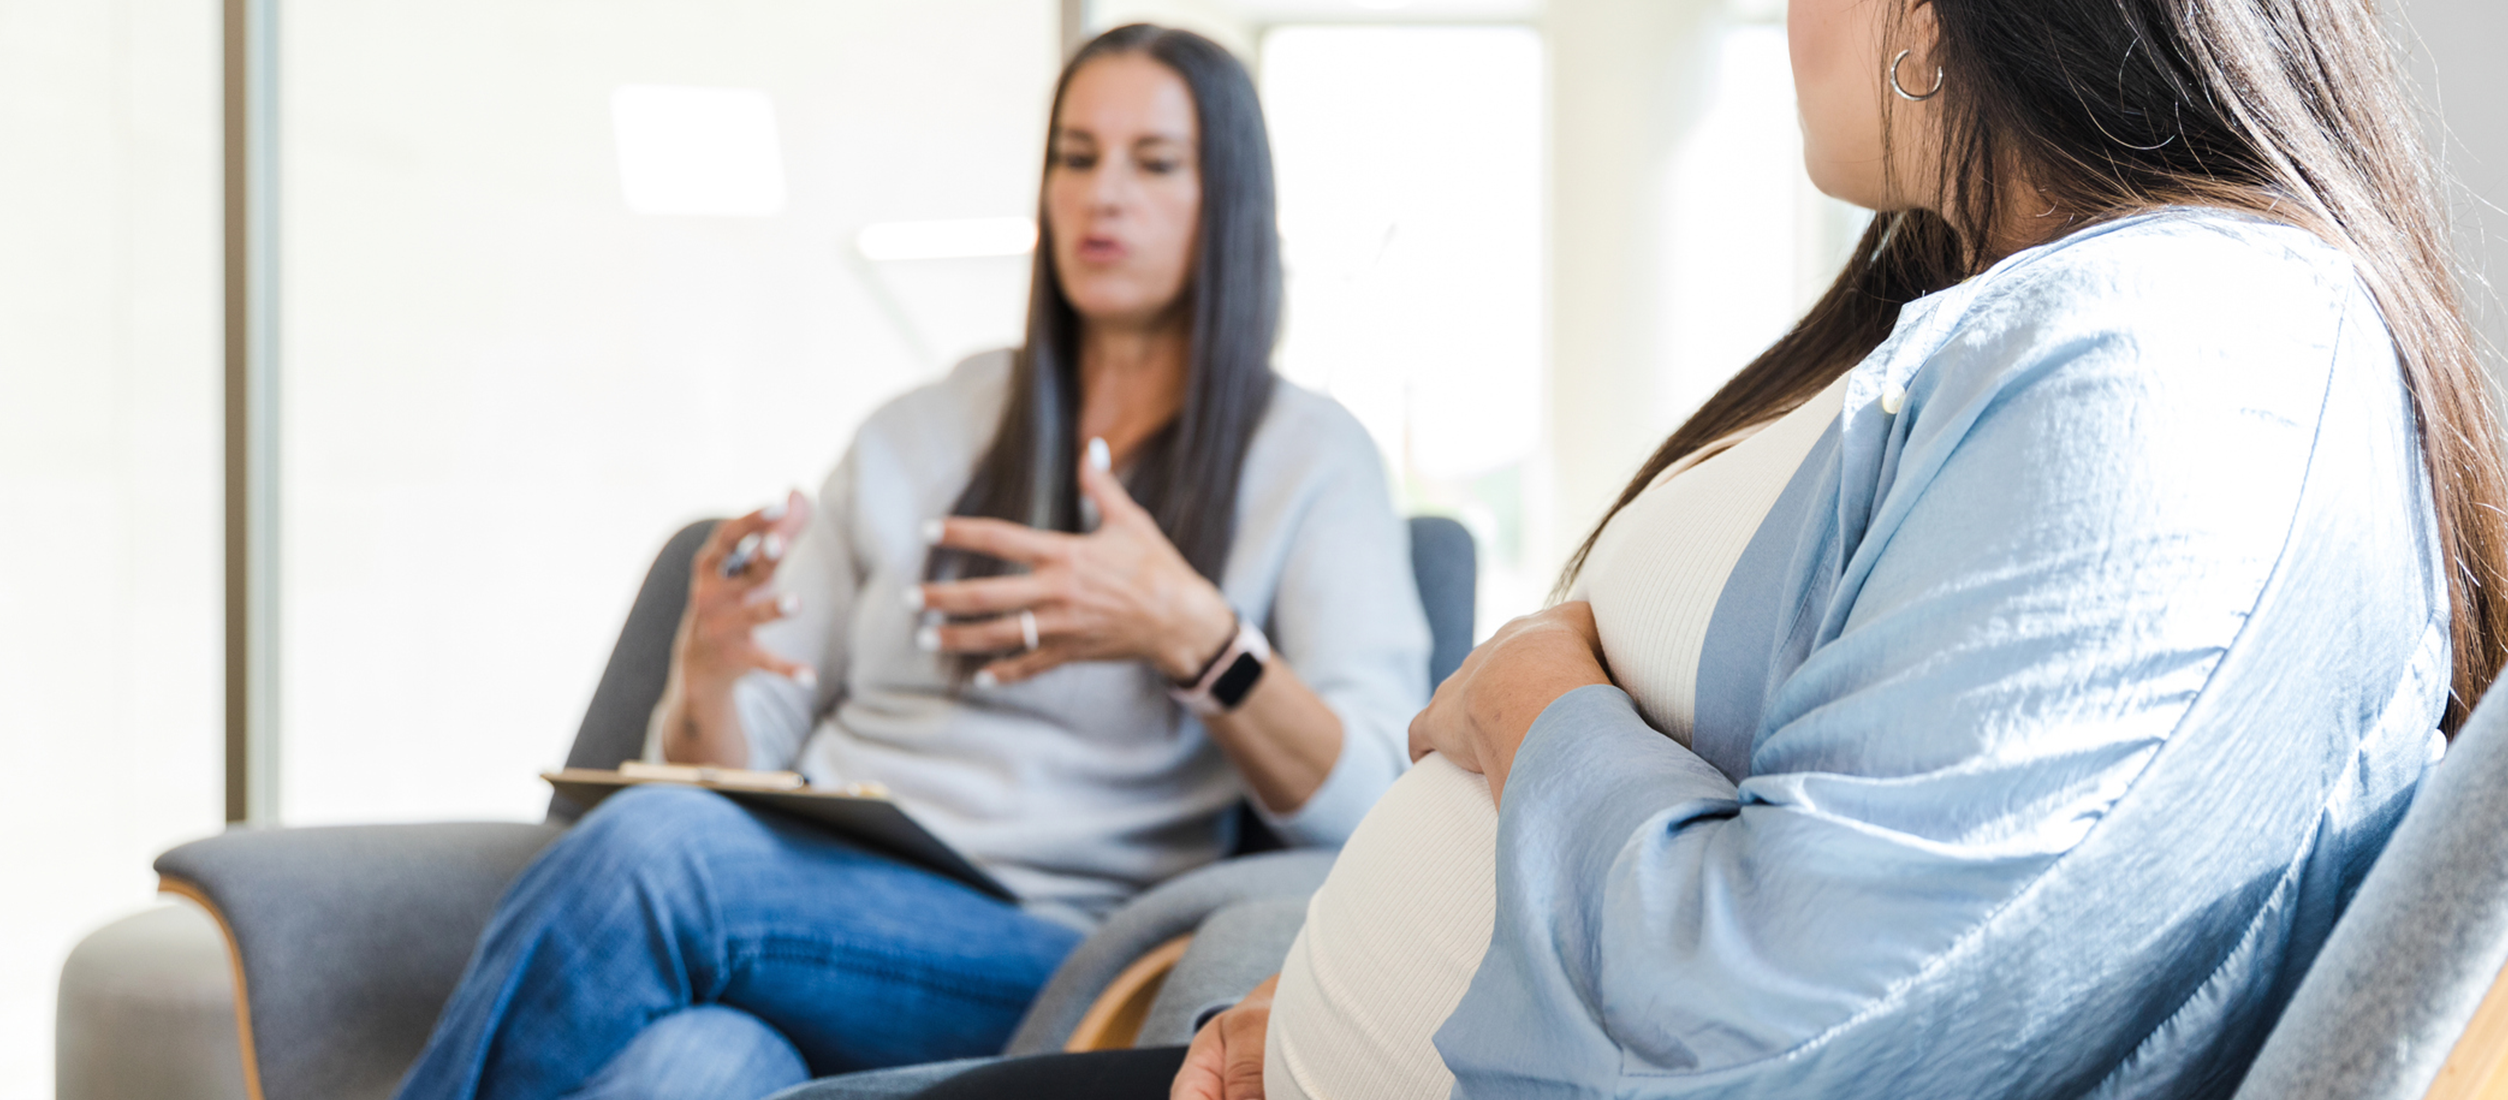 Prenatal Toxic Stress and Trauma Exposure: Implications for Mental Health Professionals